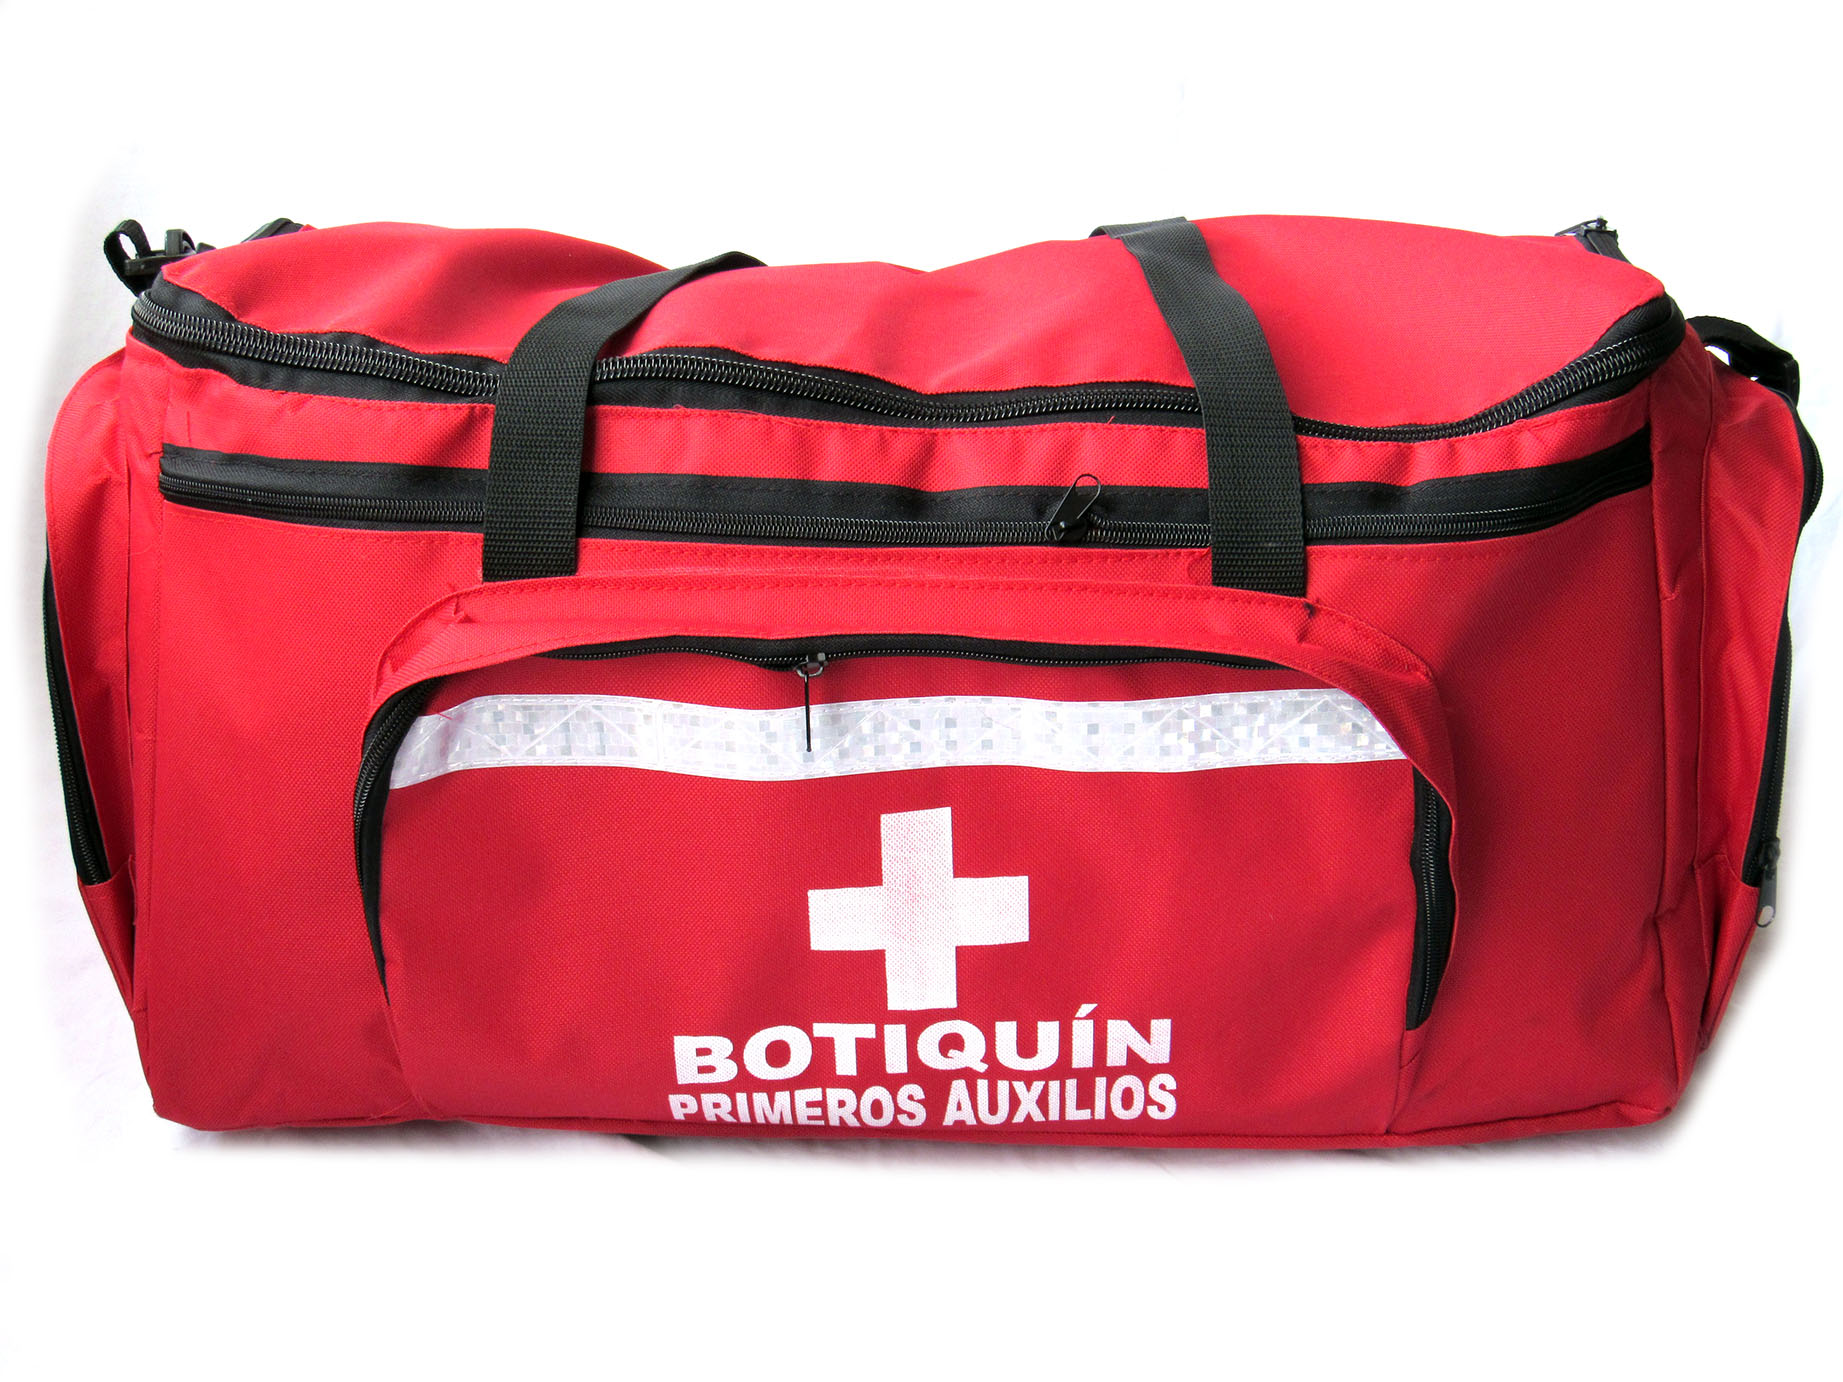 Botiquín tipo maletín mediano primeros auxilios con dotación.